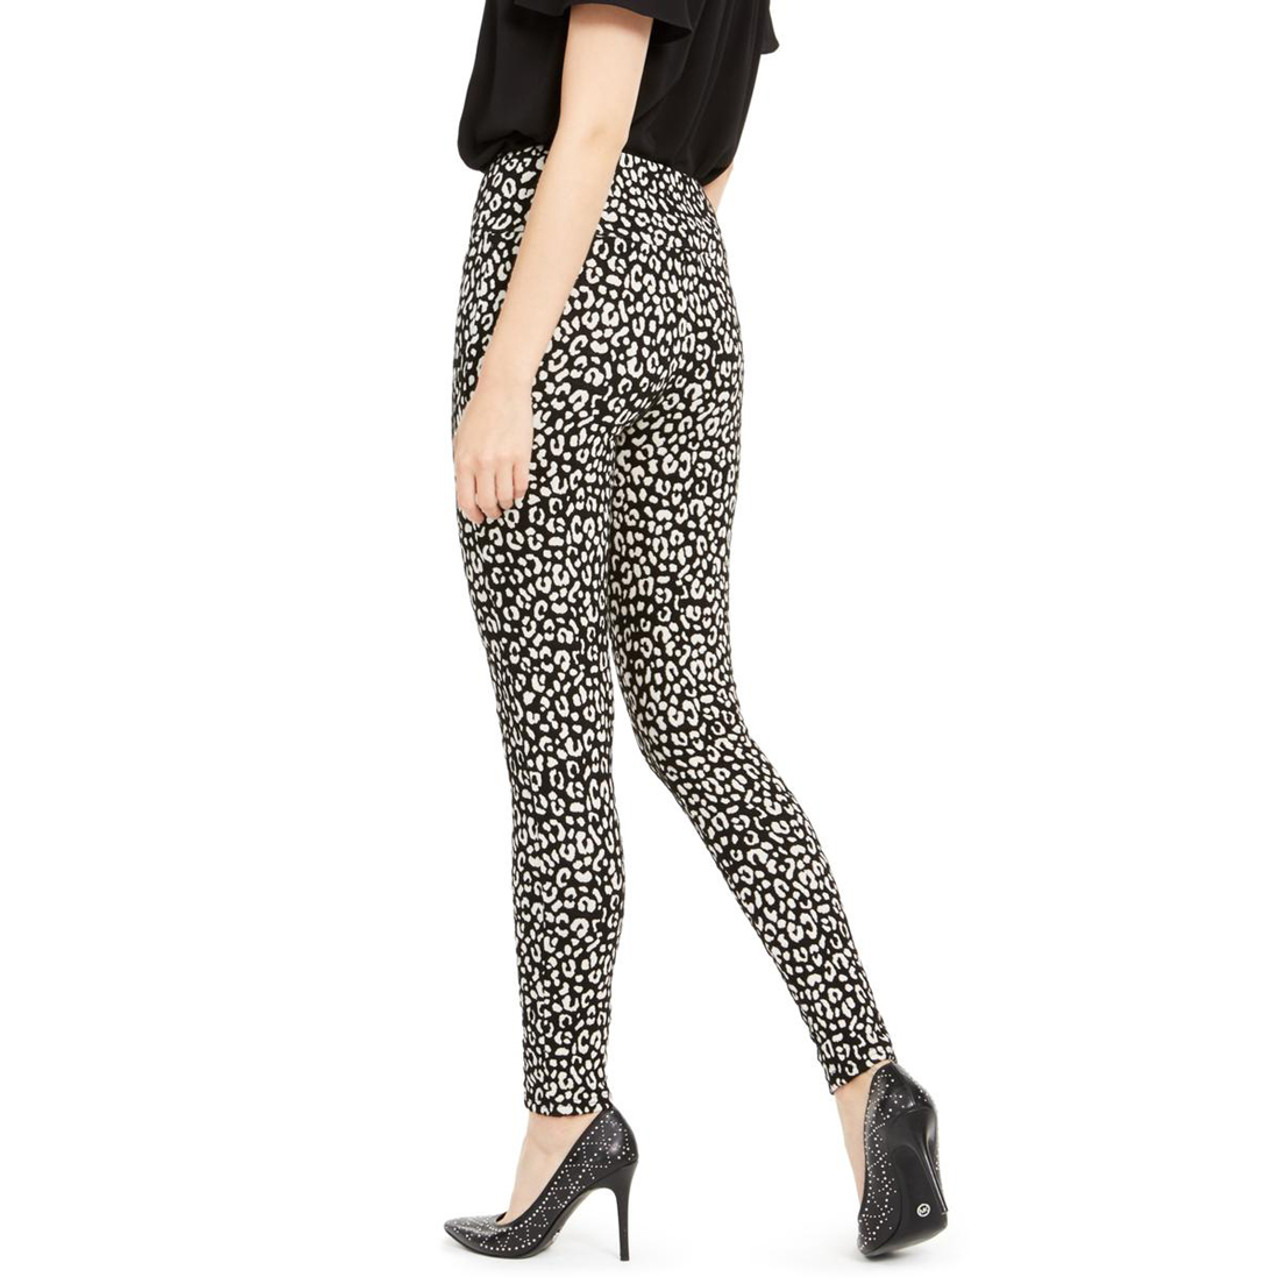 Michael Kors Textured Animal Print Pants, Black/White, Petite XL - Discount  Scrubs and Fashion